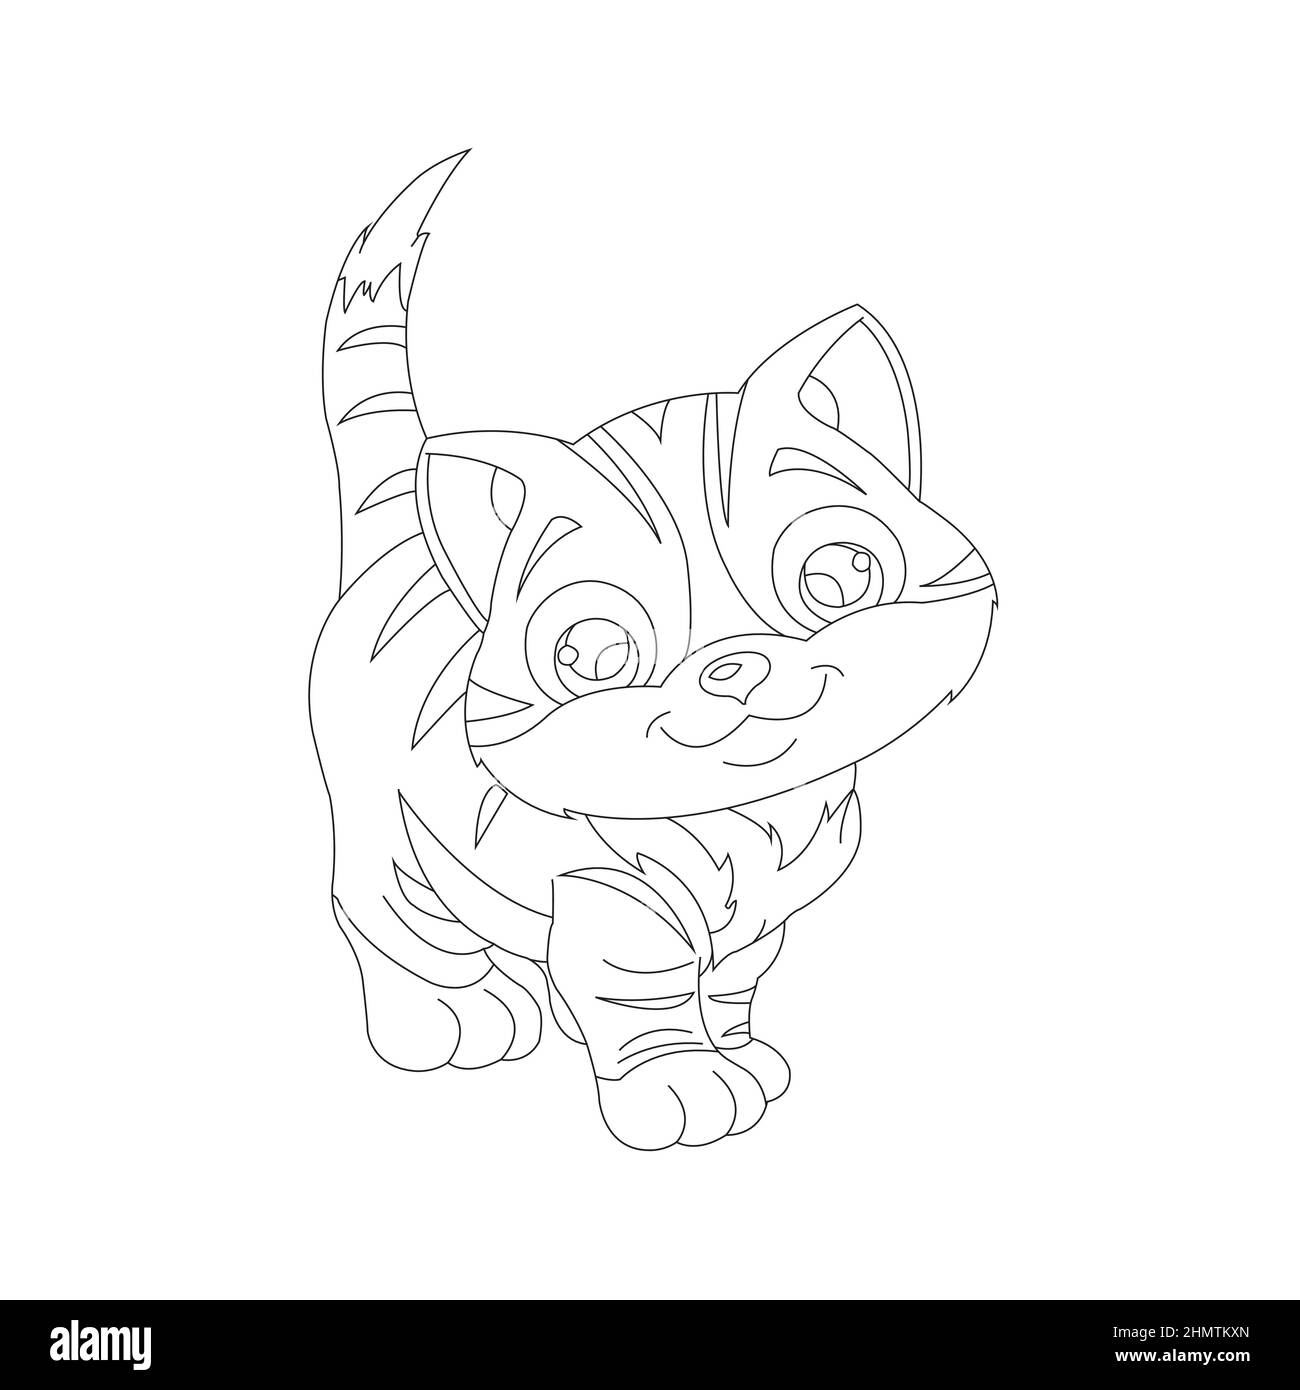 https://c8.alamy.com/comp/2HMTKXN/coloring-page-outline-of-cute-cat-animal-coloring-page-cartoon-vector-illustration-2HMTKXN.jpg